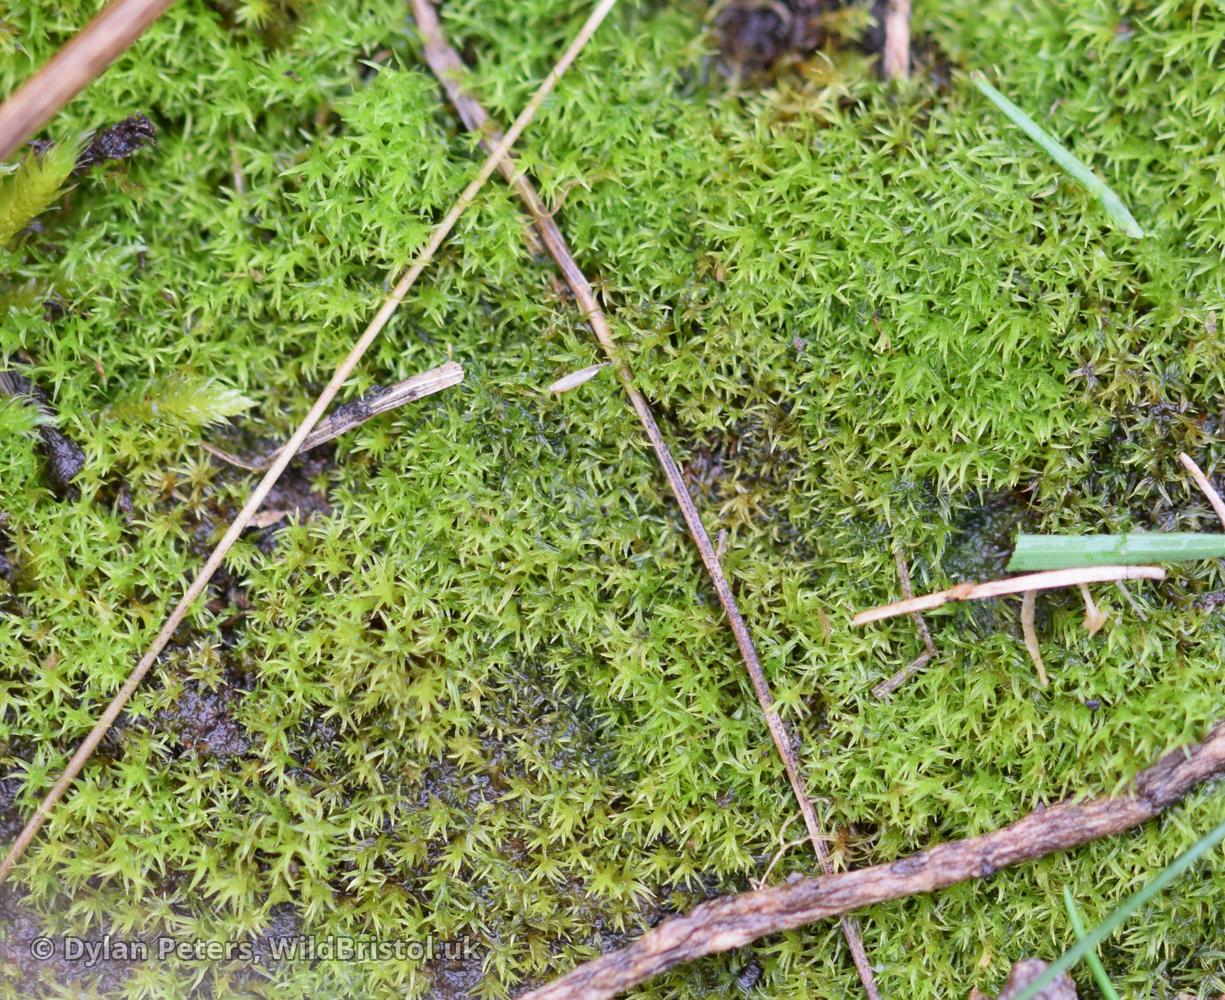 Redshank Moss (Ceratodon purpureus) Species WildBristol.uk